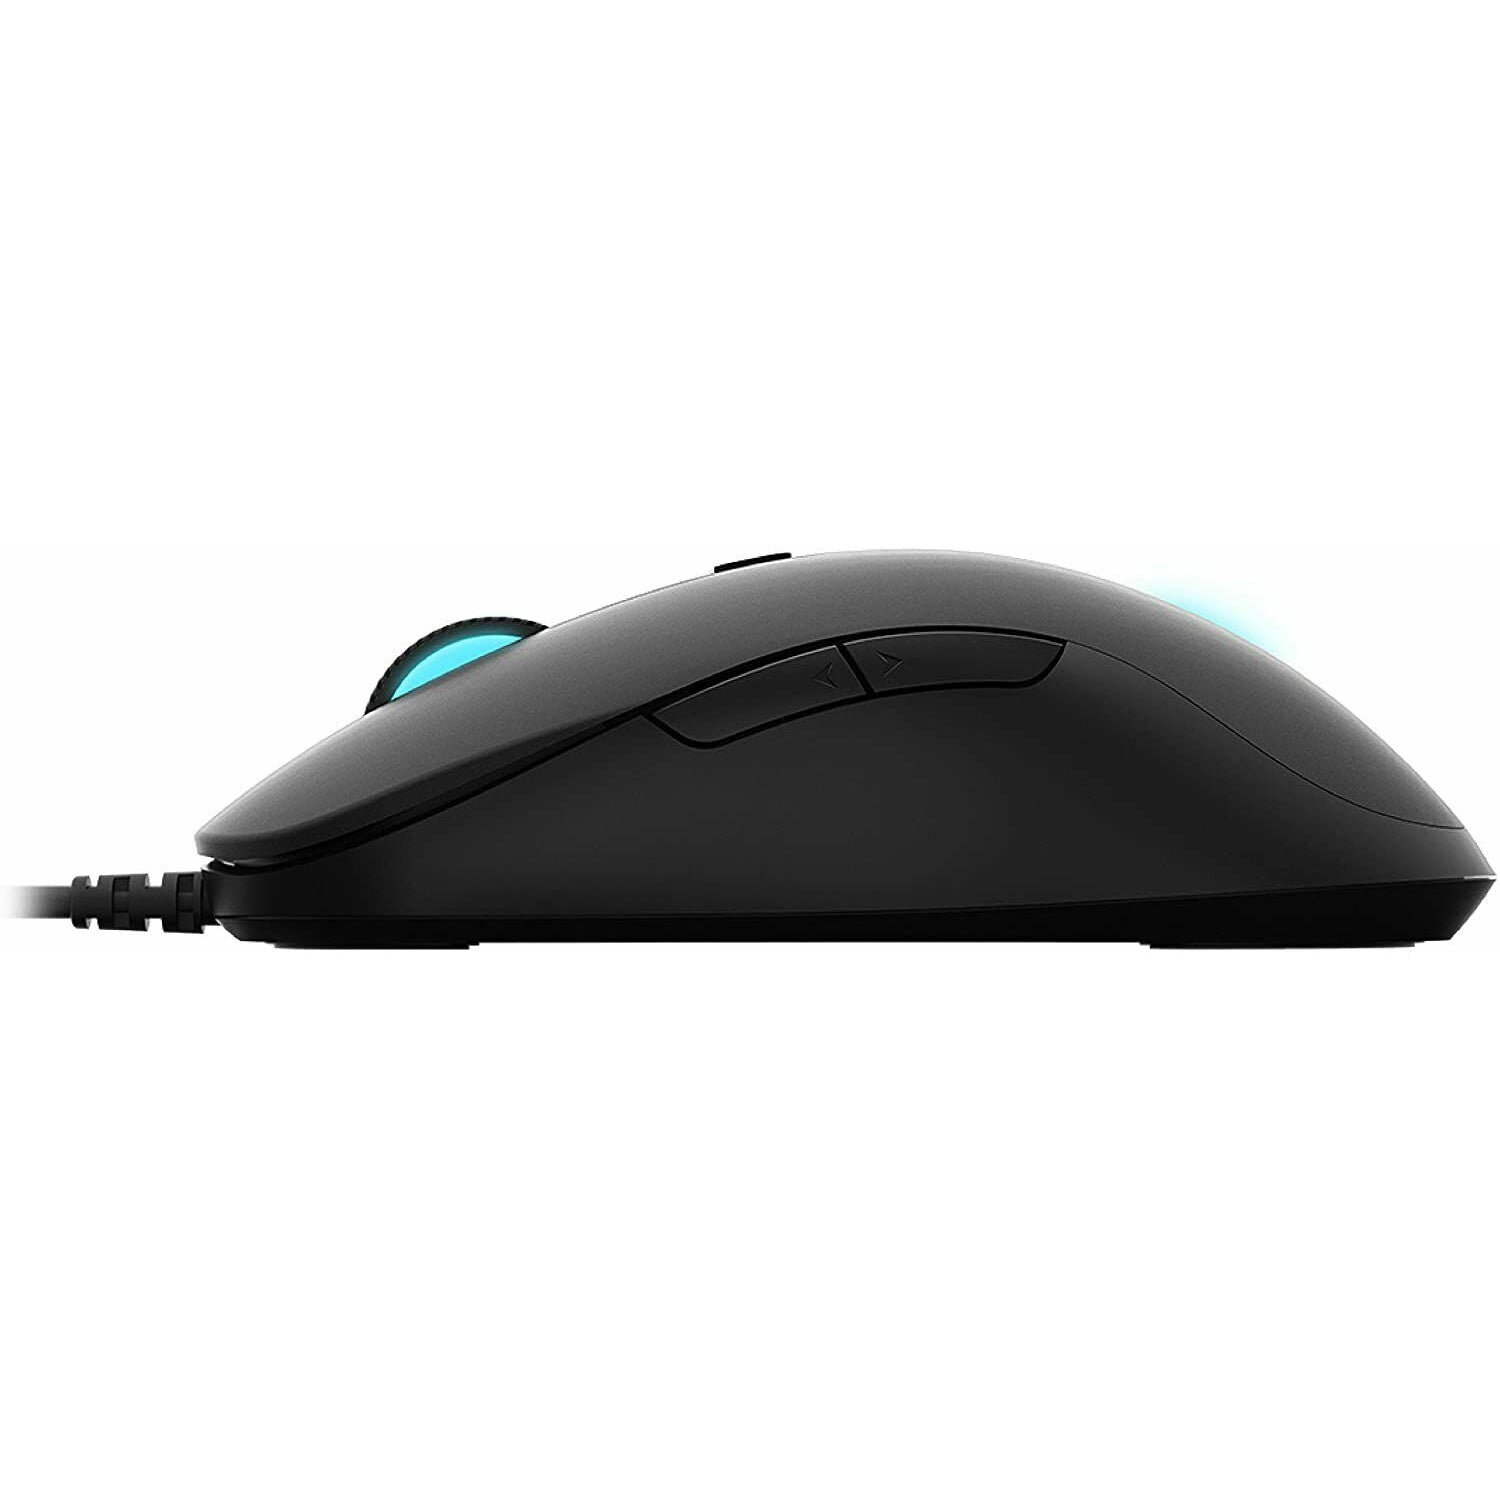 Rapoo V16 Optical Wired Gaming Mouse - Black - Refurbished Pristine